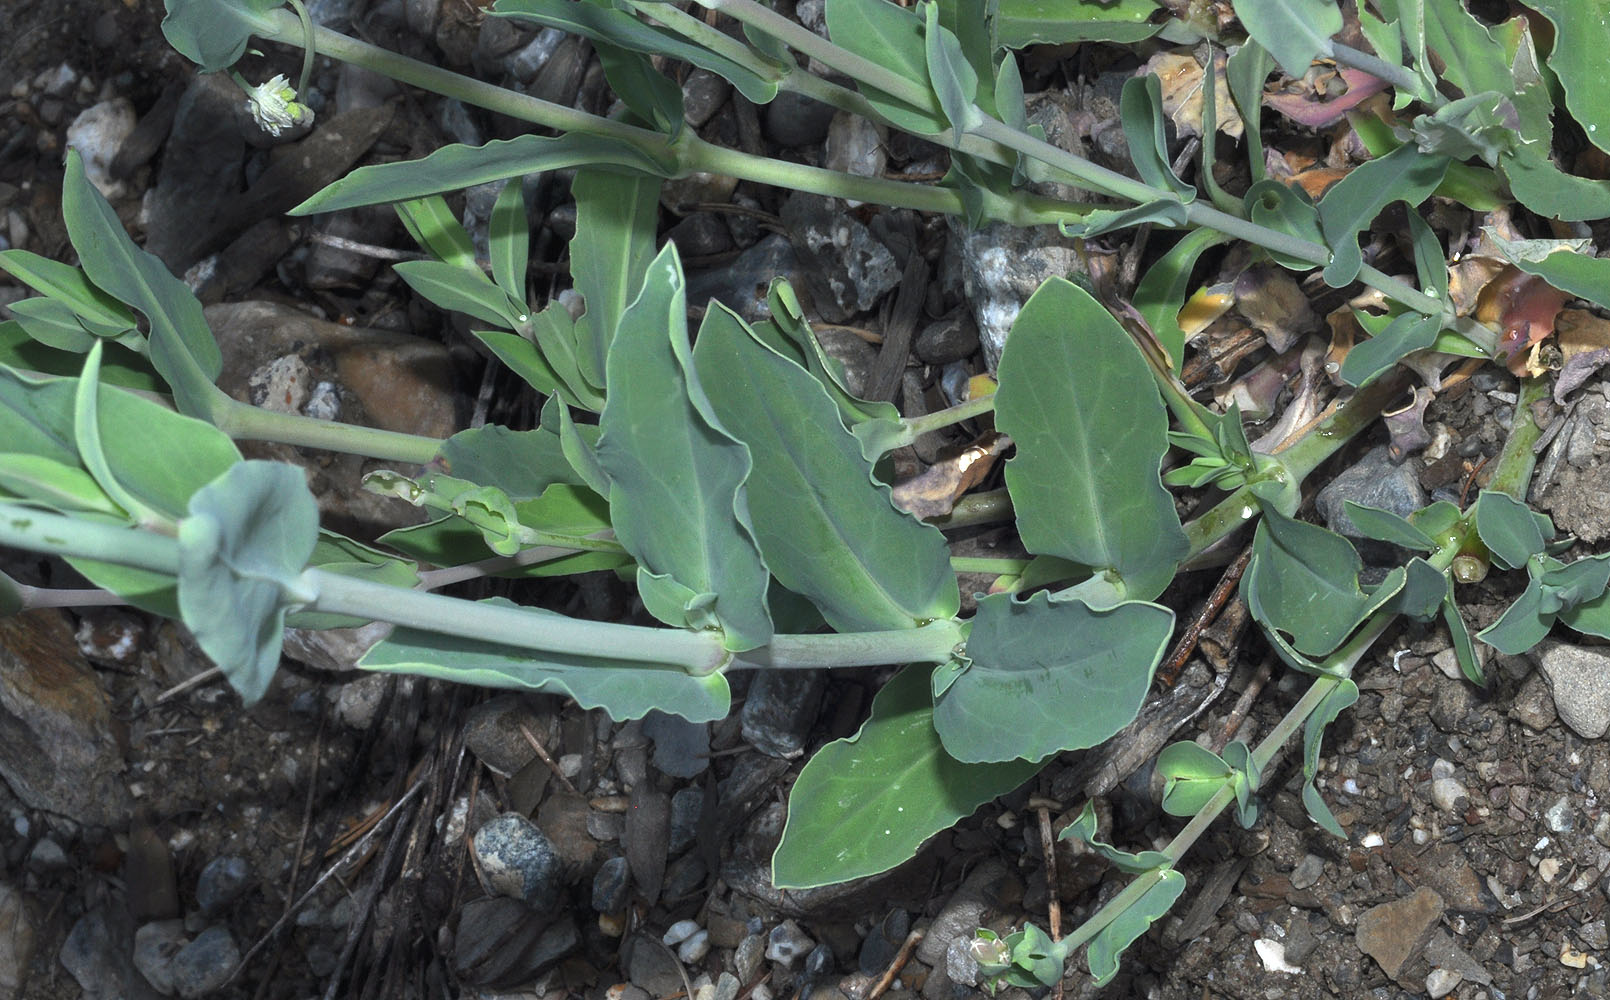 Flora of Eastern Washington Image: Silene vulgaris